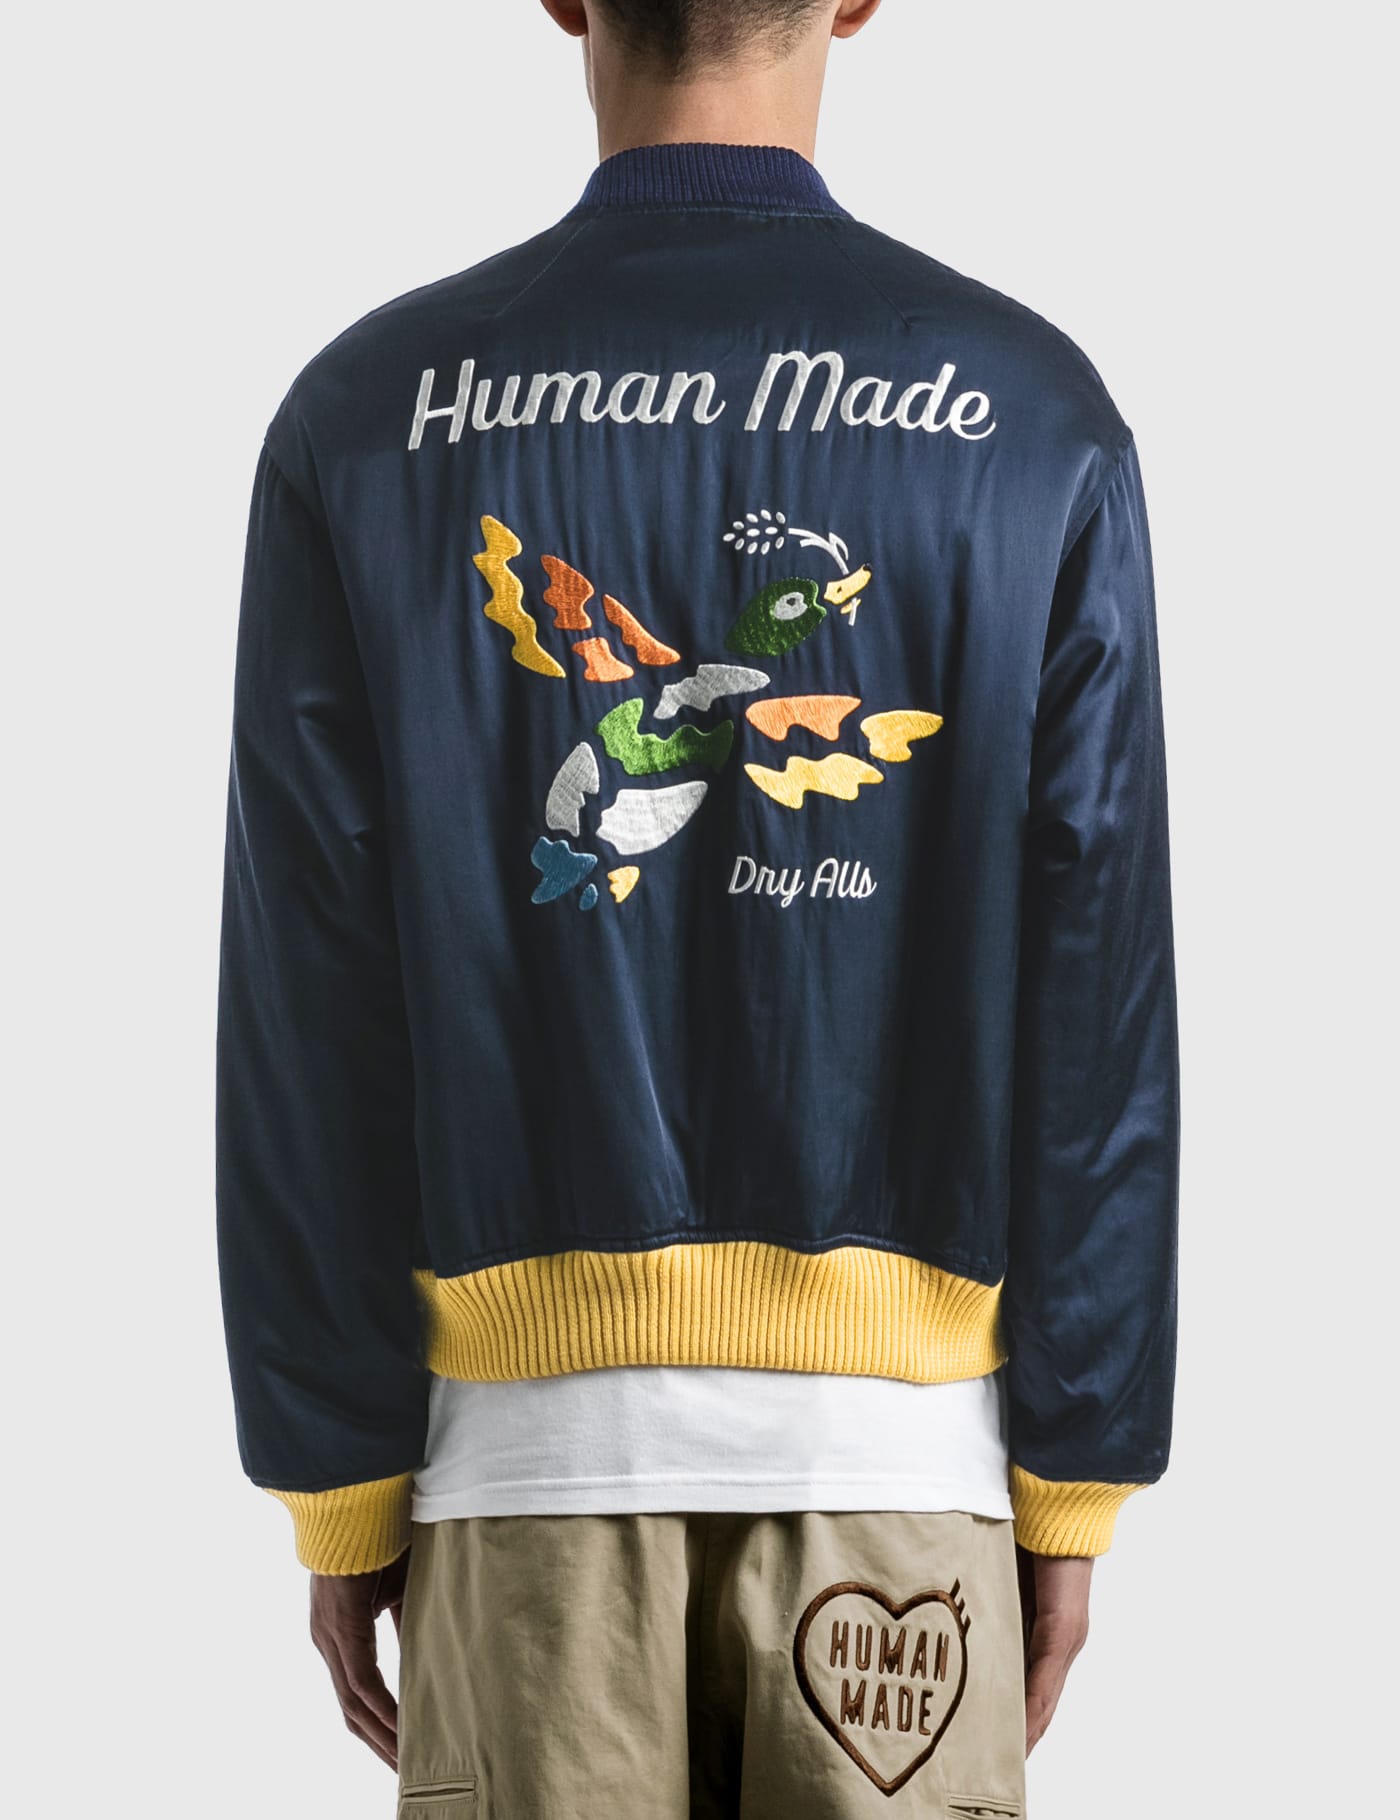 Human Made - Satin Jacket | HBX - ハイプビースト(Hypebeast)が厳選したグローバルファッション&ライフスタイル